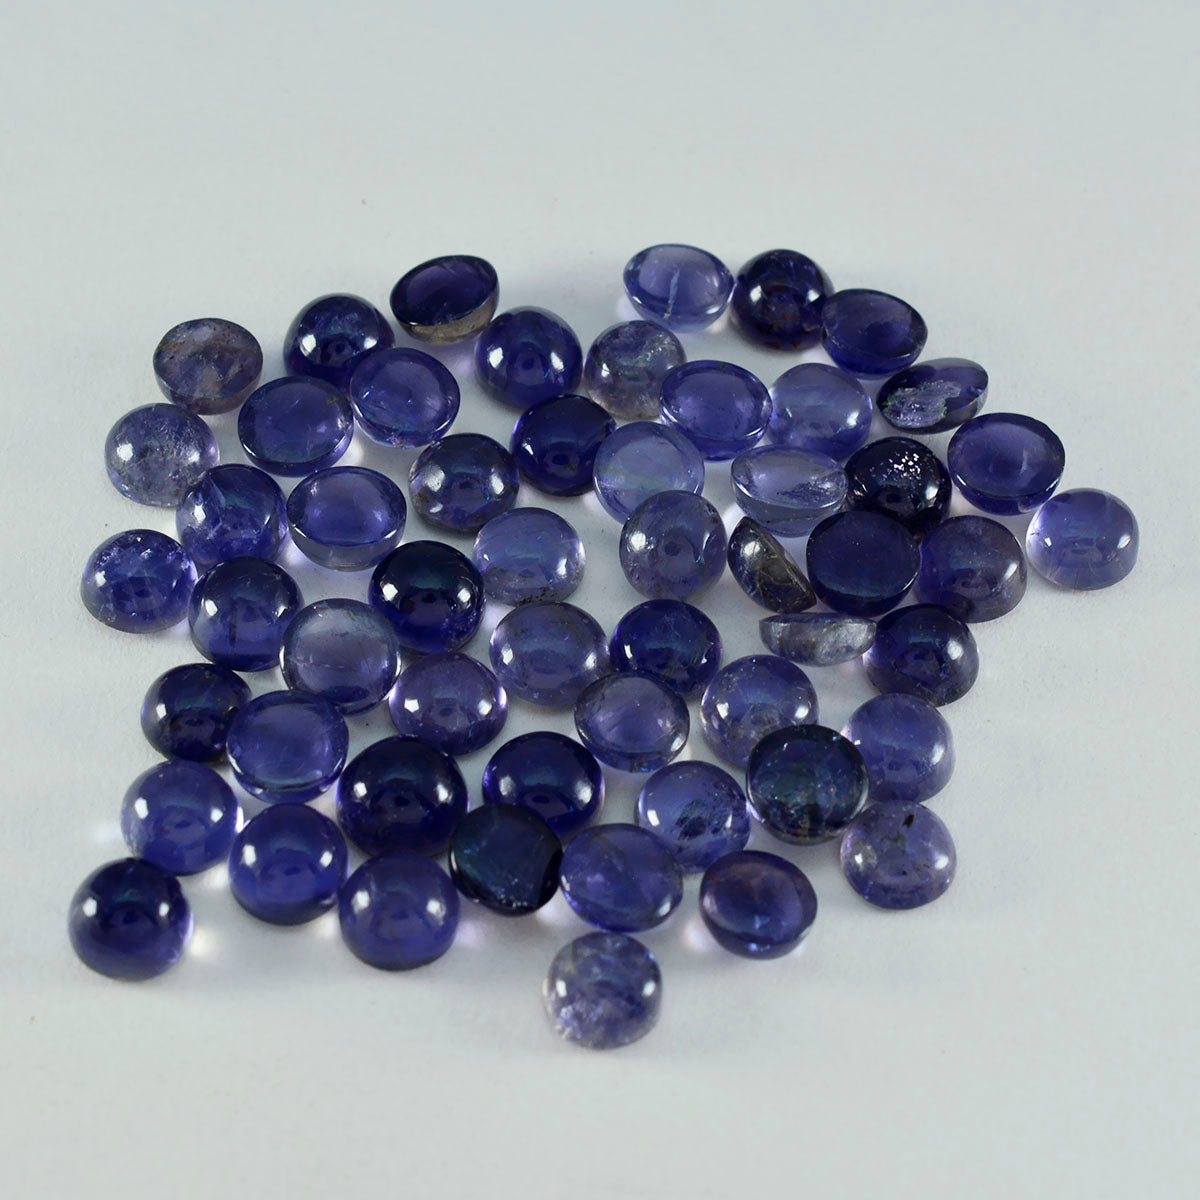 Riyogems 1PC blauwe ioliet cabochon 6x6 mm ronde vorm AAA kwaliteit edelsteen